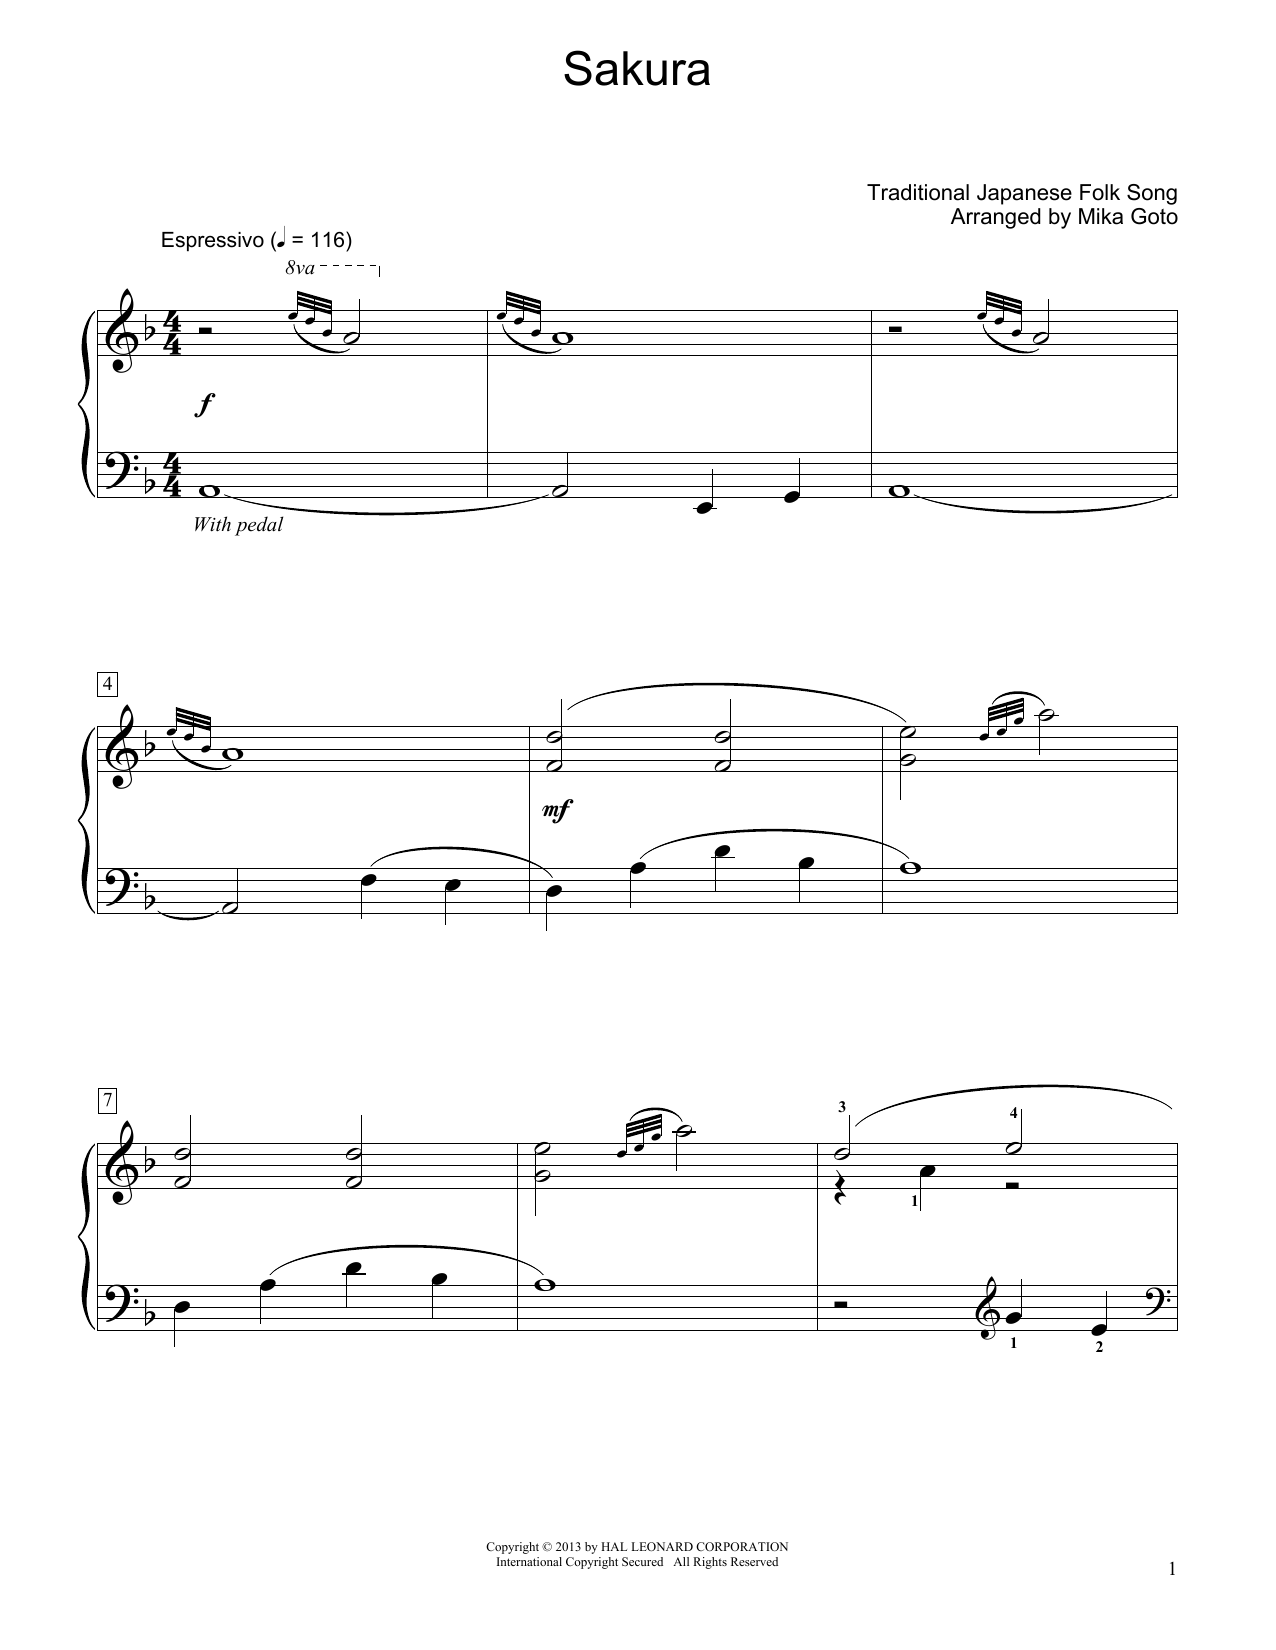 Traditional Japanese Folk Song Sakura (arr. Mika Goto) Sheet Music Notes & Chords for Educational Piano - Download or Print PDF